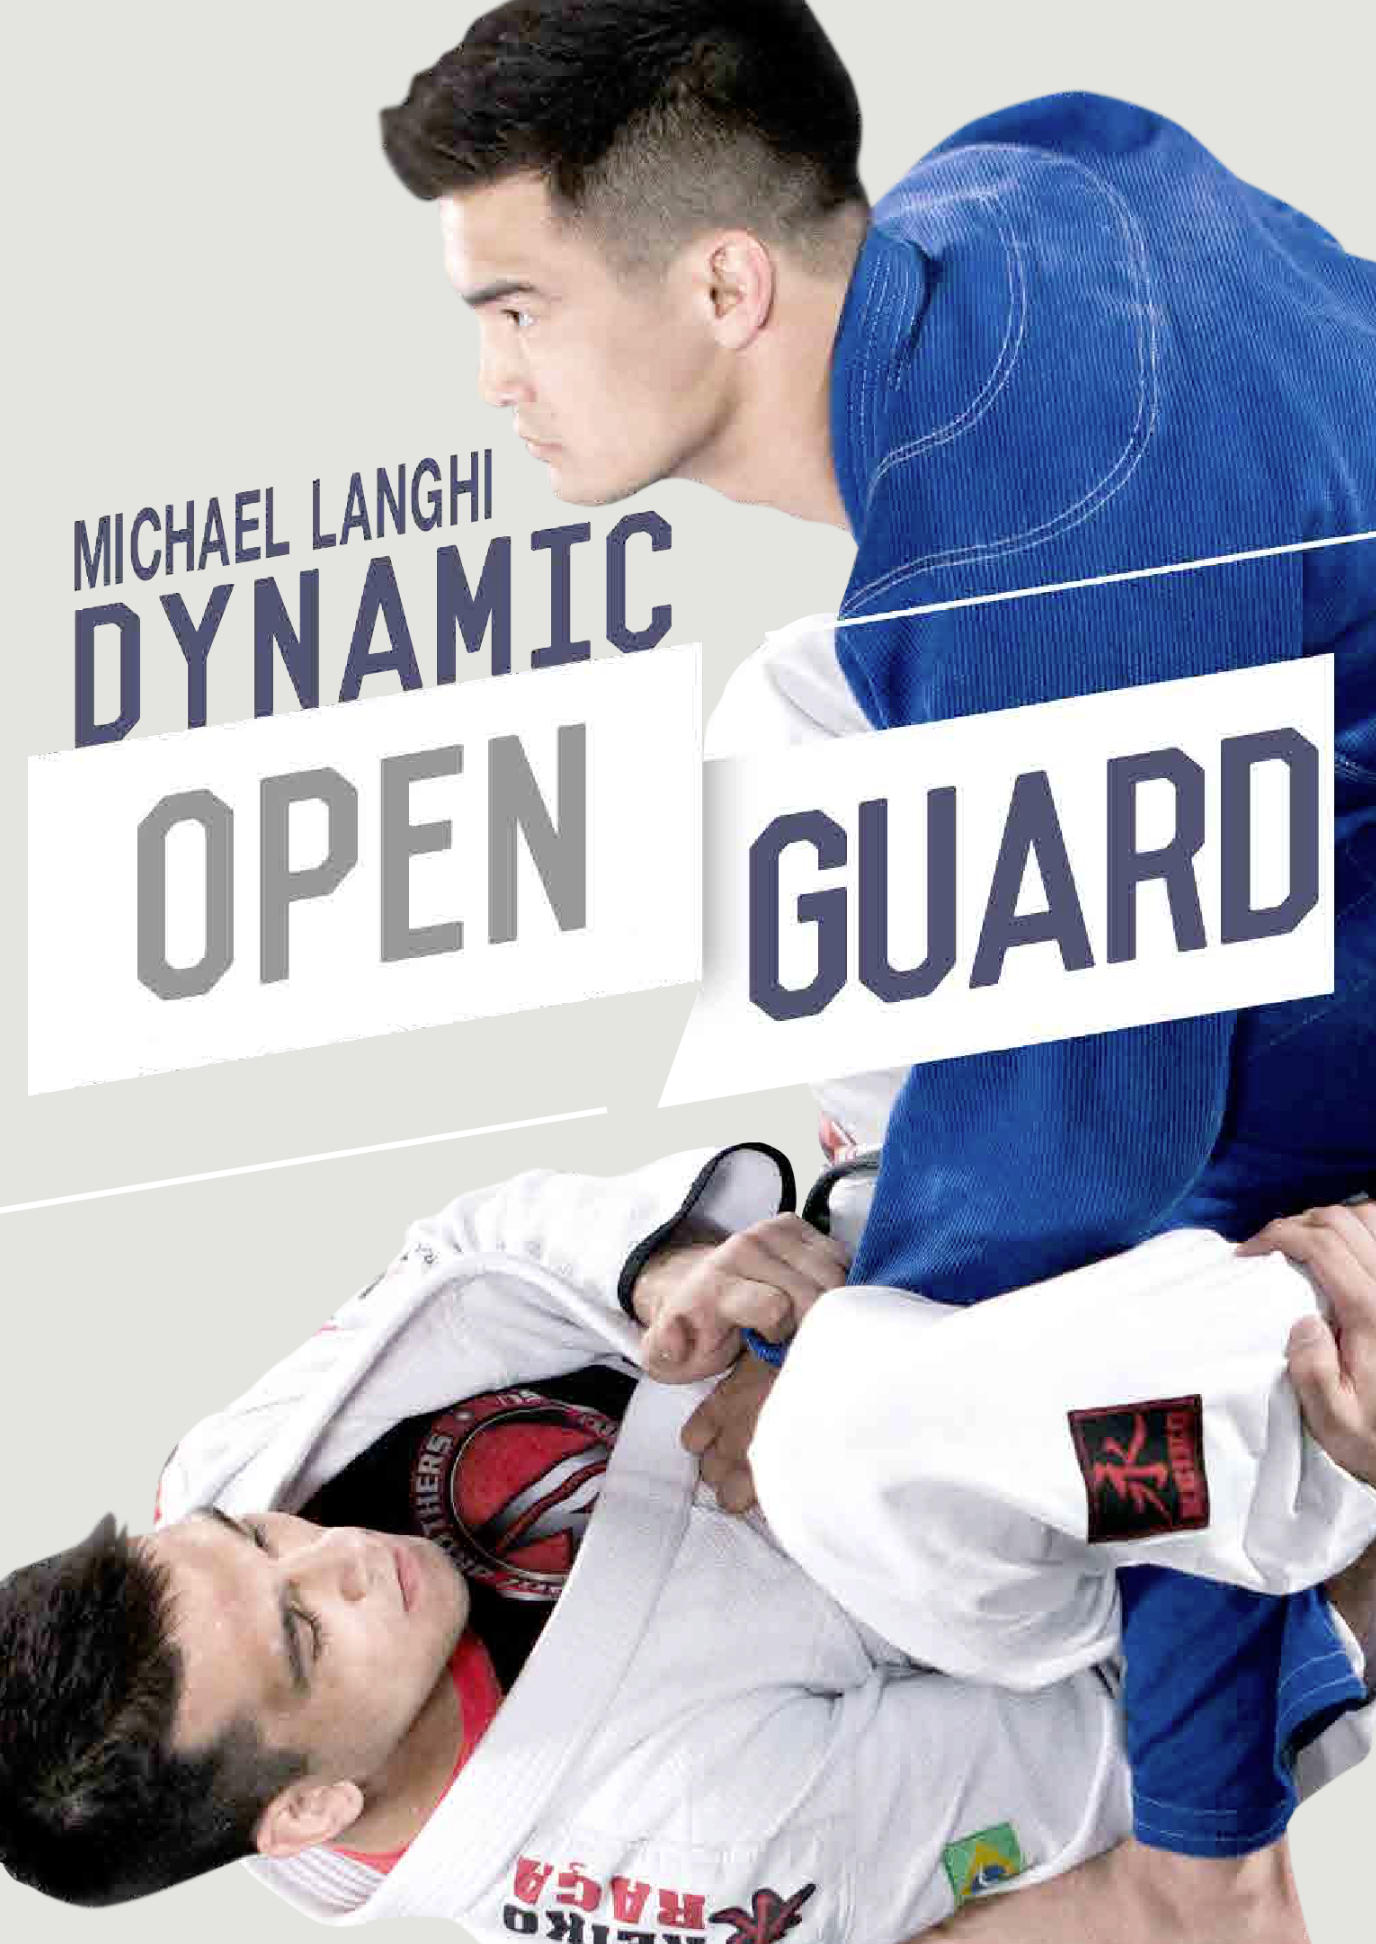 Juego de DVD Dynamic Open Guard 3 de Michael Langhi